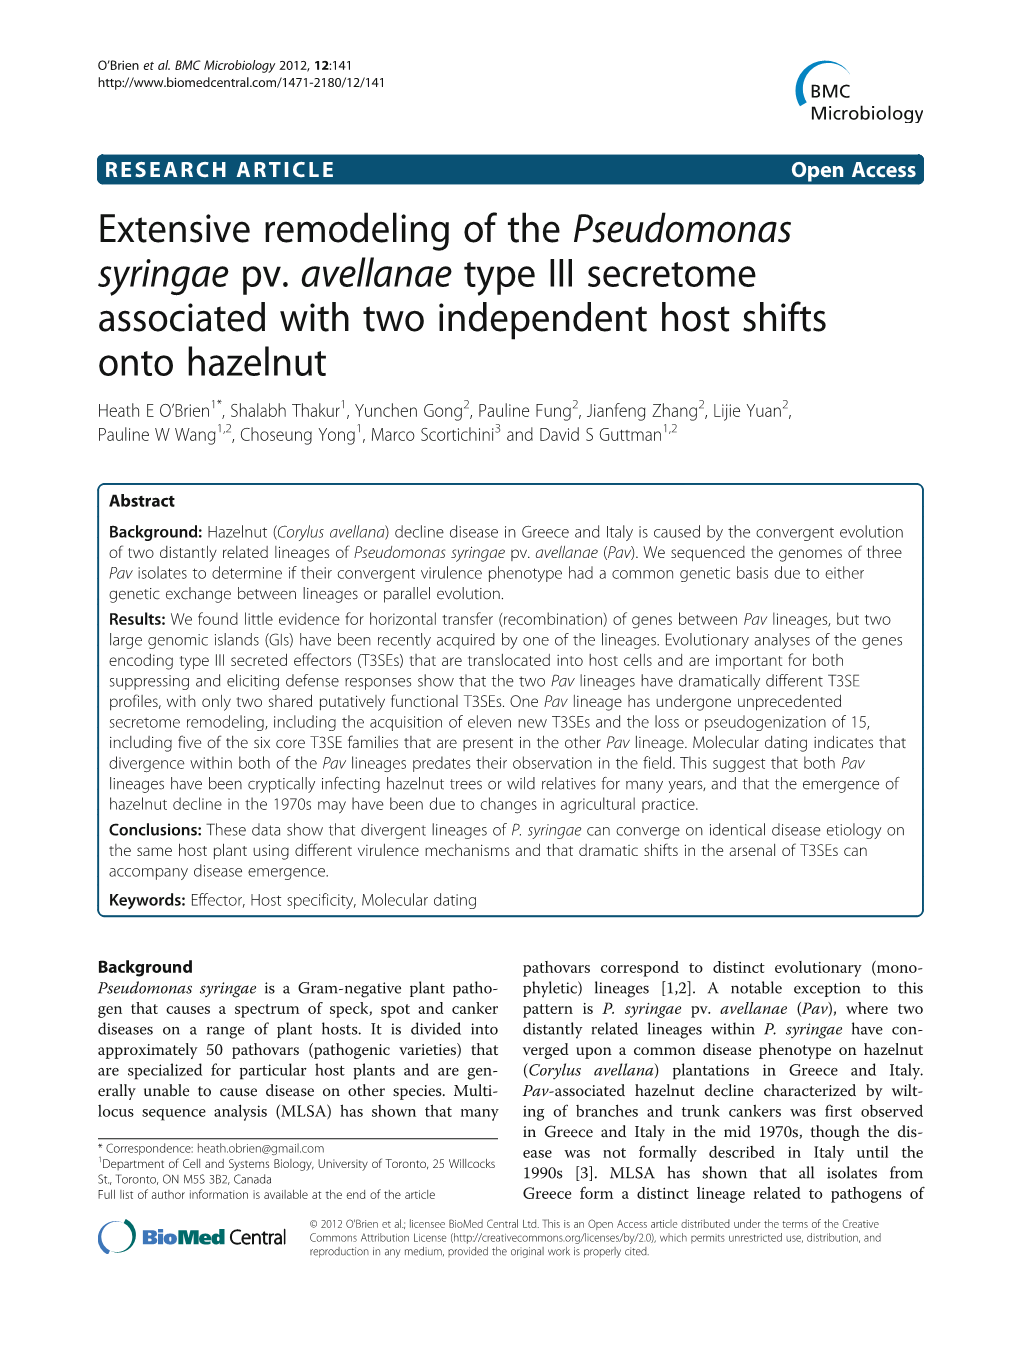 Extensive Remodeling of the Pseudomonas Syringae Pv